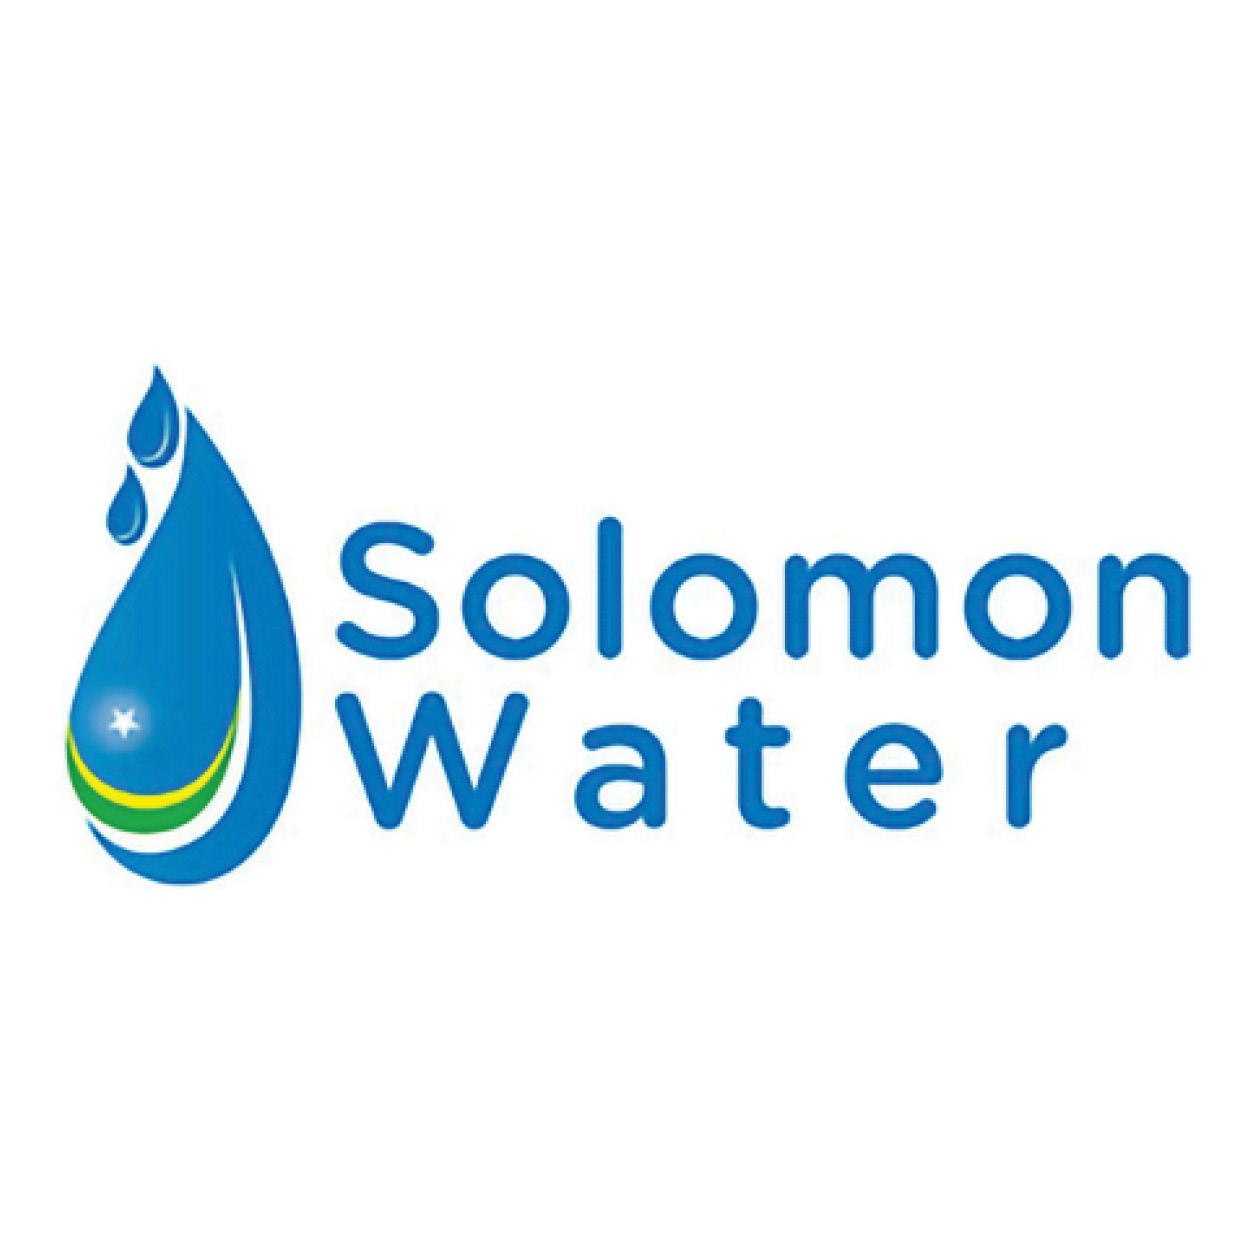 Solomon Water